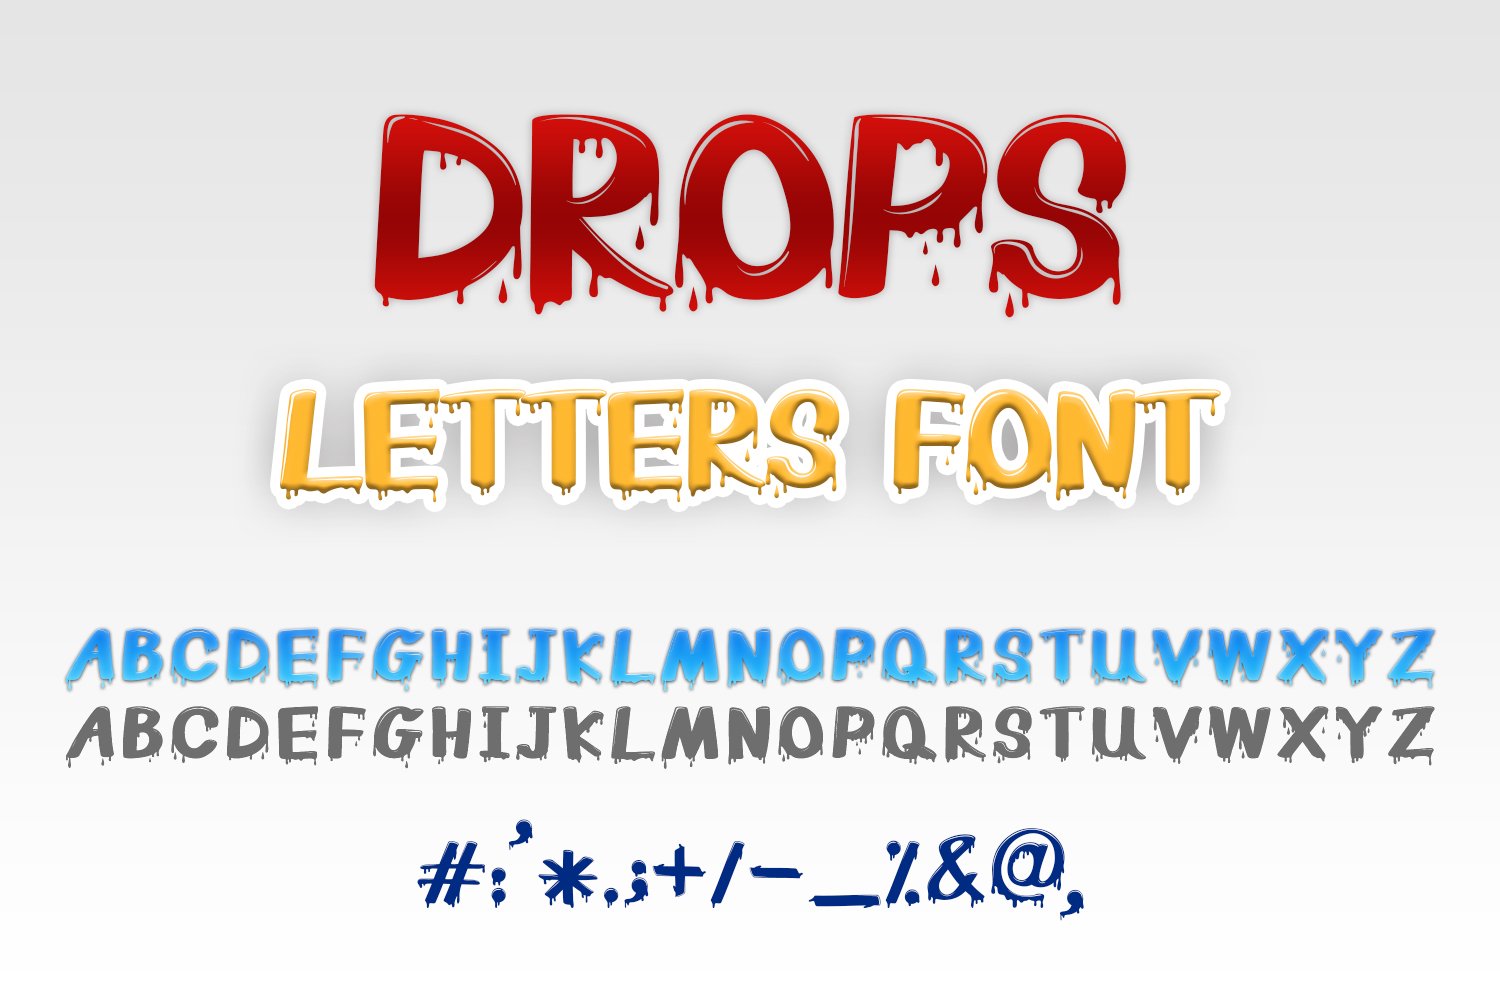 Drops Letters Font cover image.